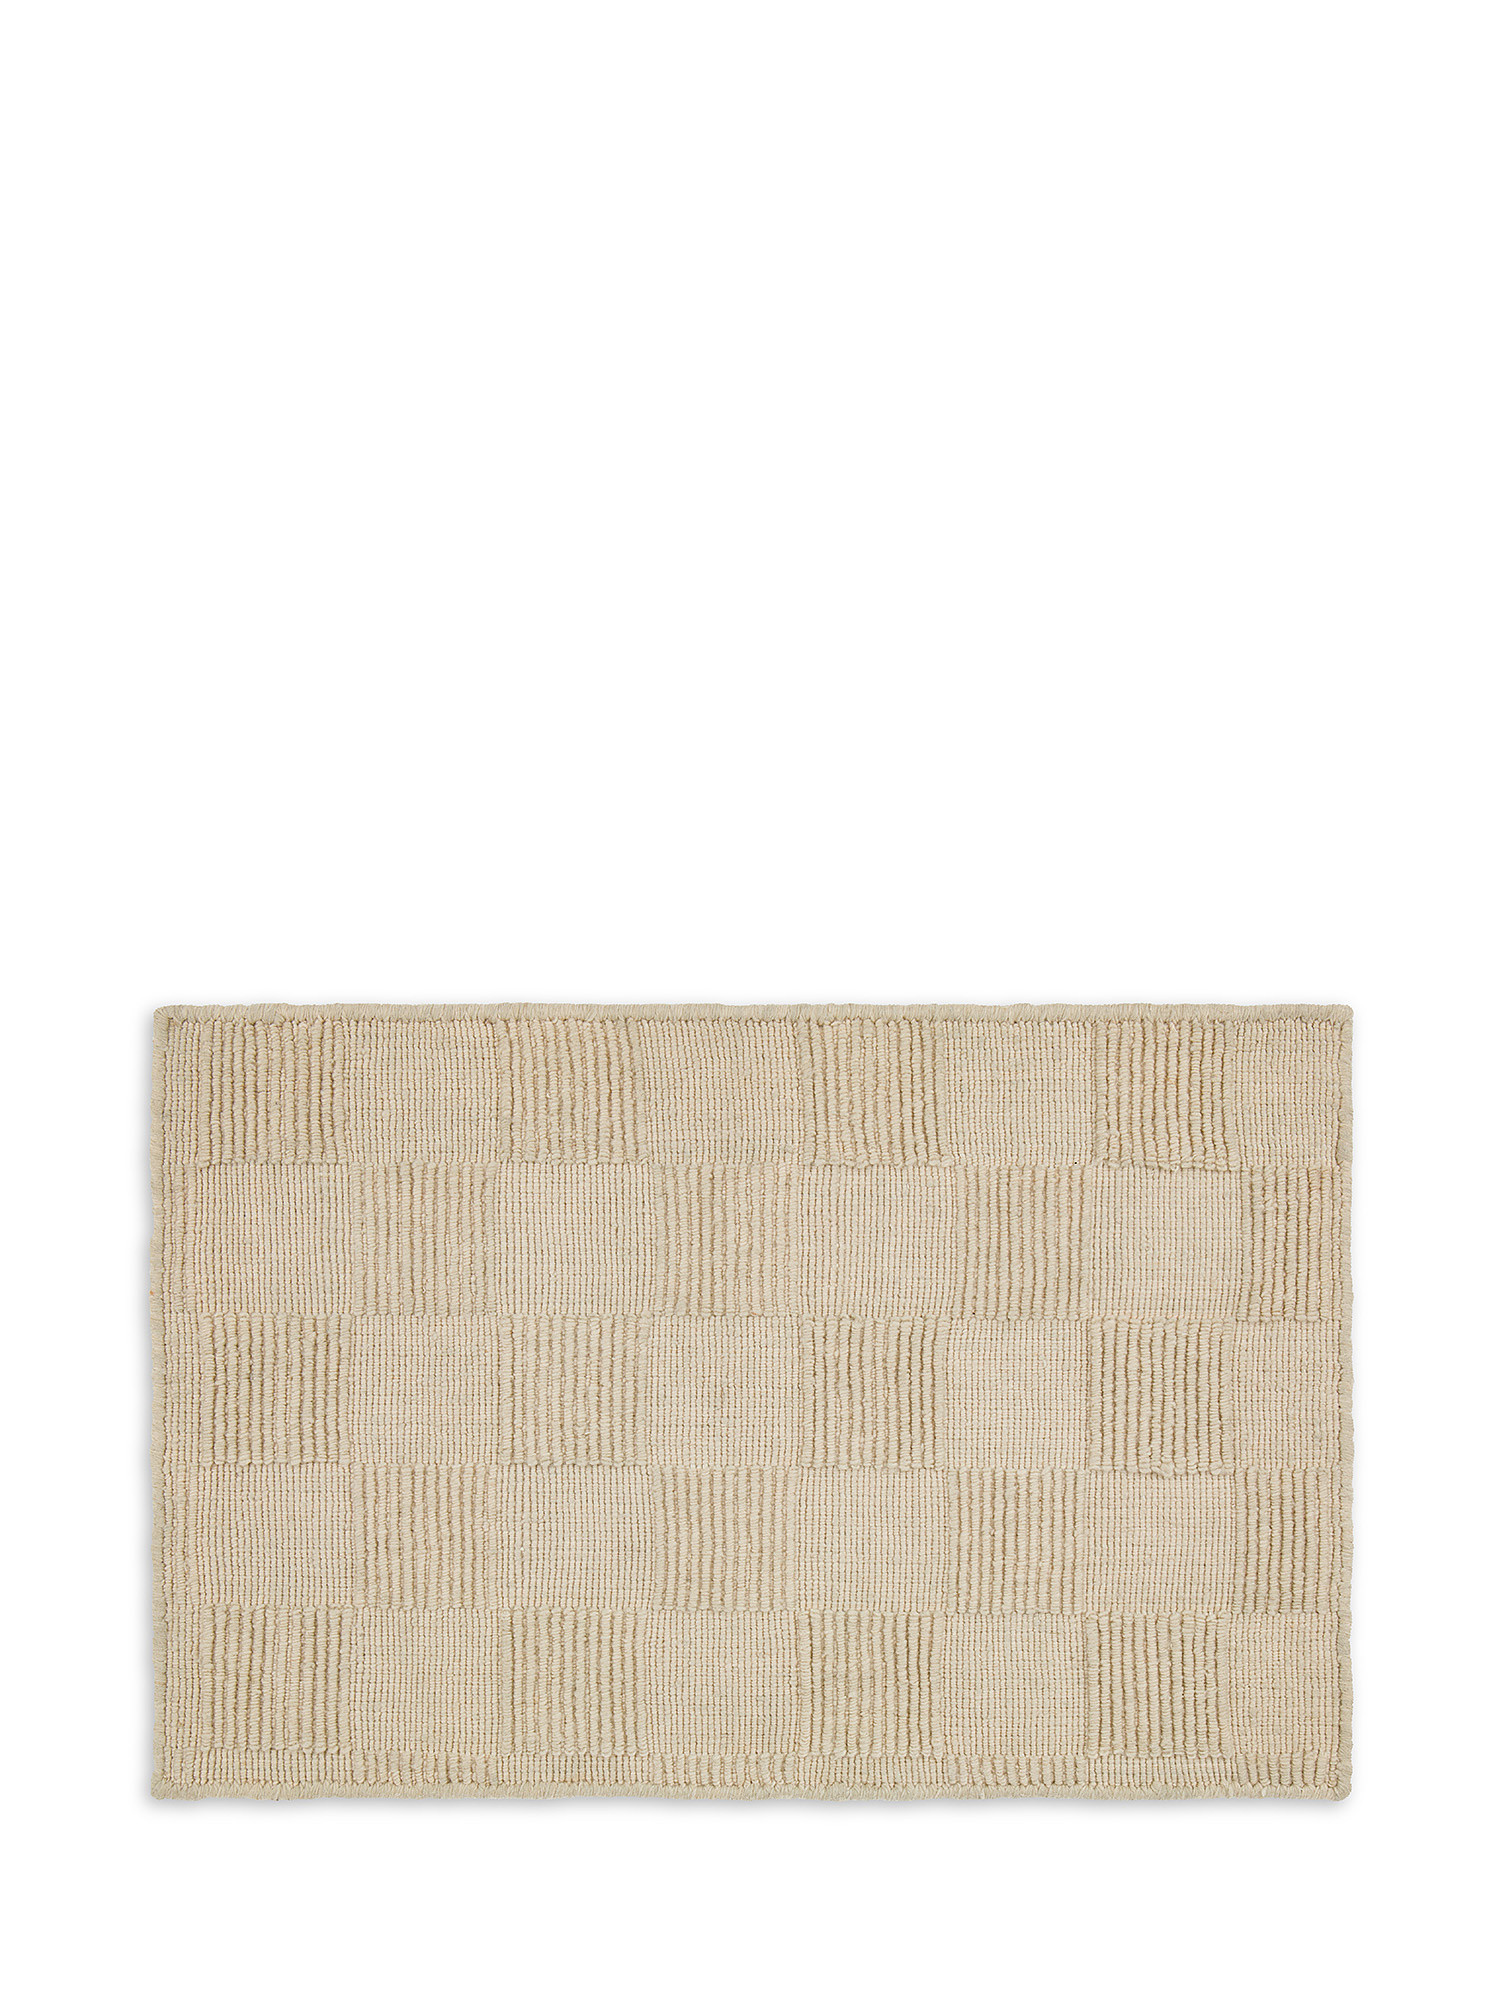 Tappeto 120x180 cm con motivo geometrico., Bianco avorio, large image number 0